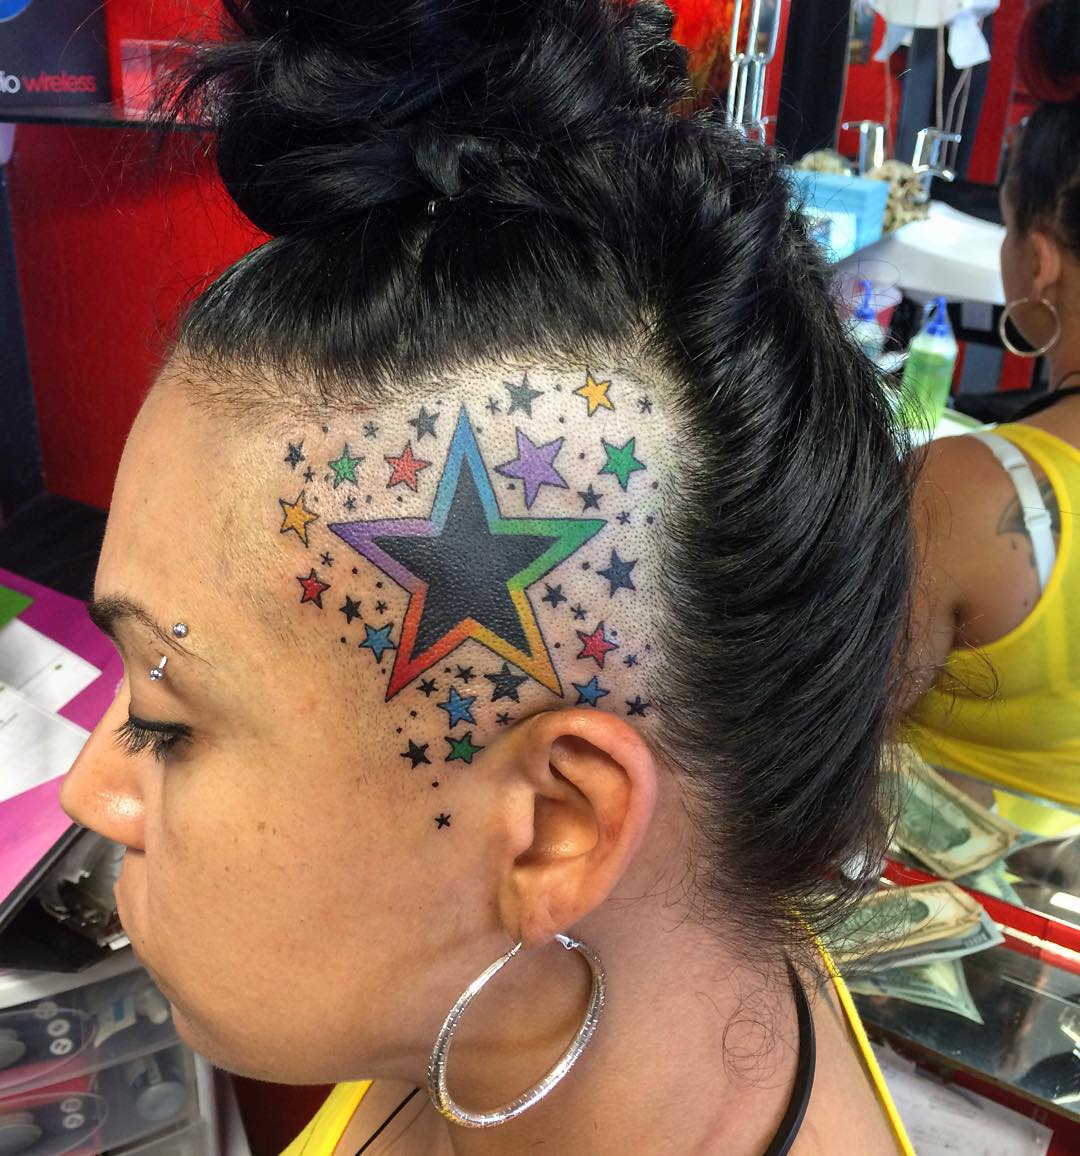 Colored Stars Tattoos On Girl Head